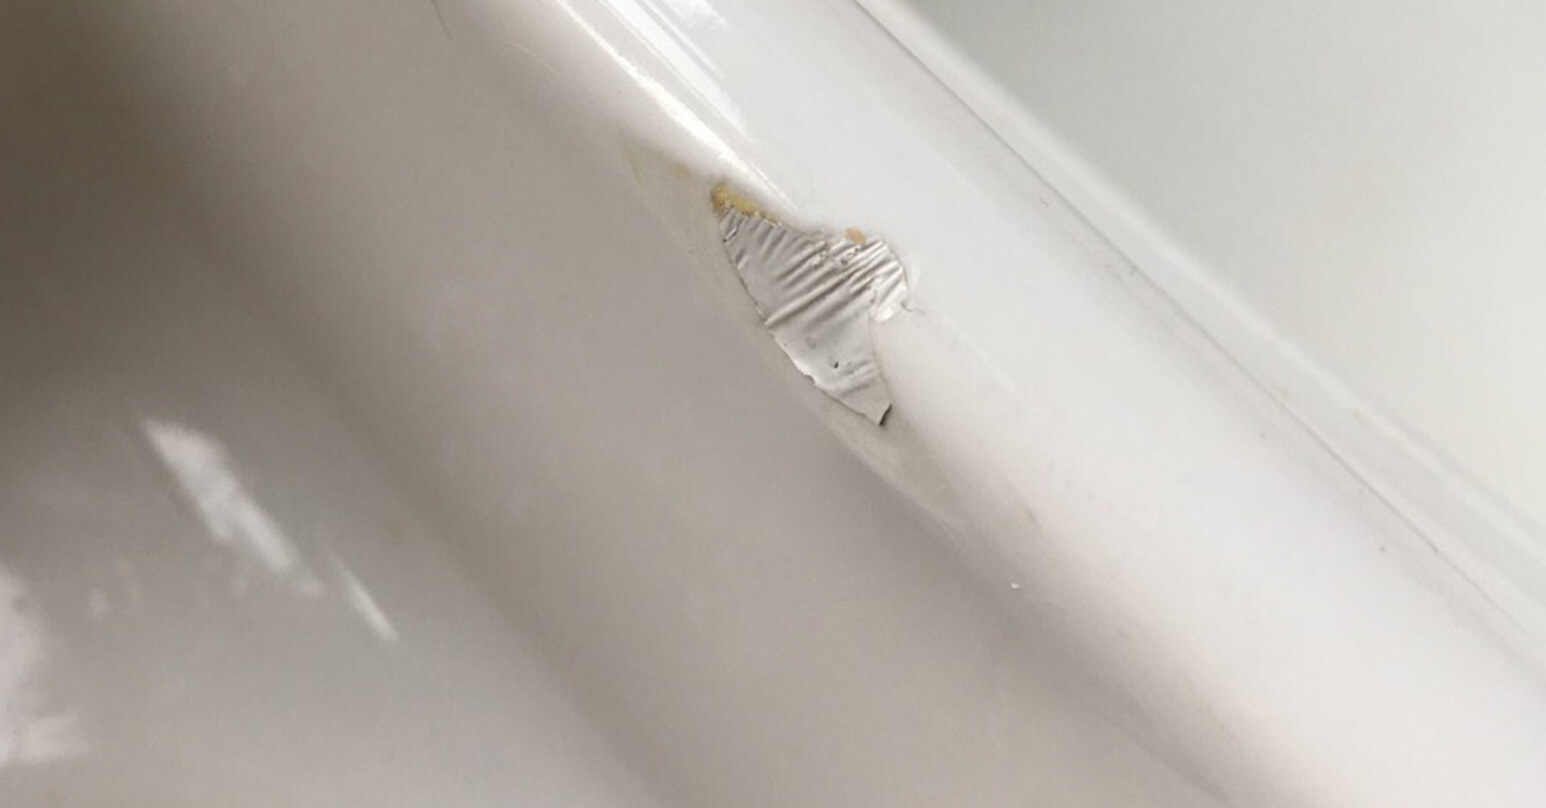 Dented sink - Before repair